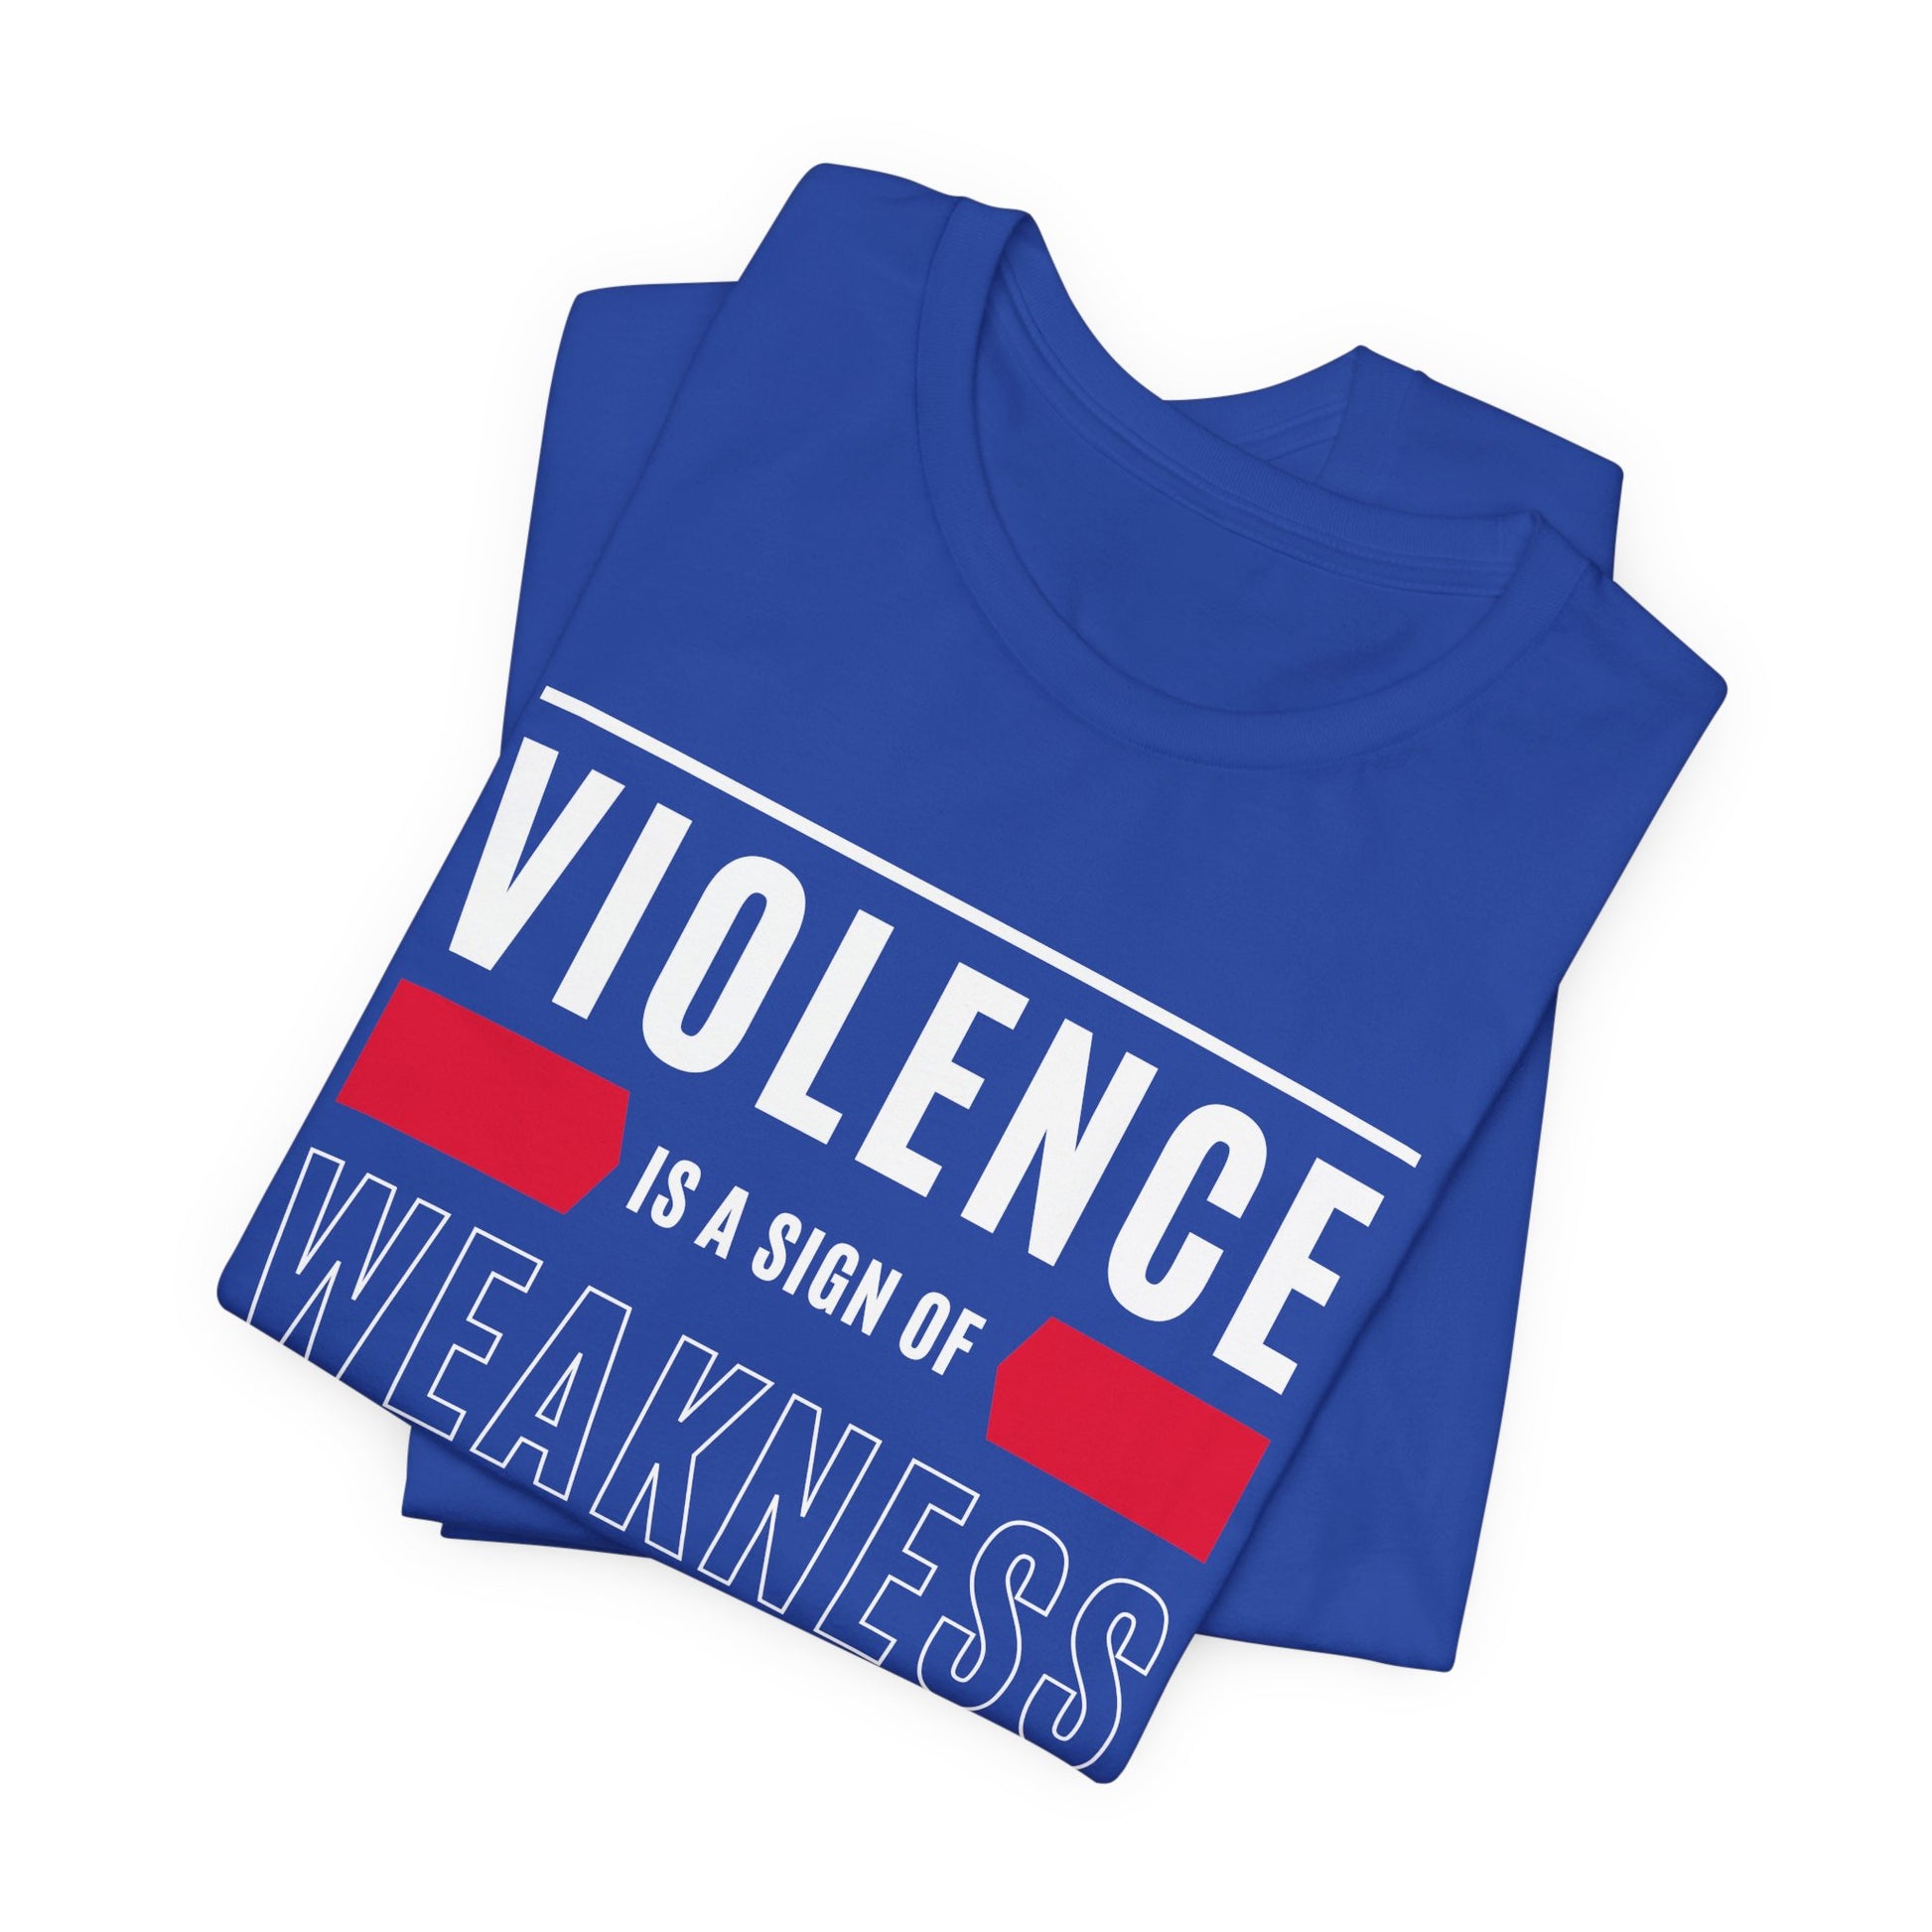 Royal Blue BC 3001 Women's anti-violence t-shirt. 